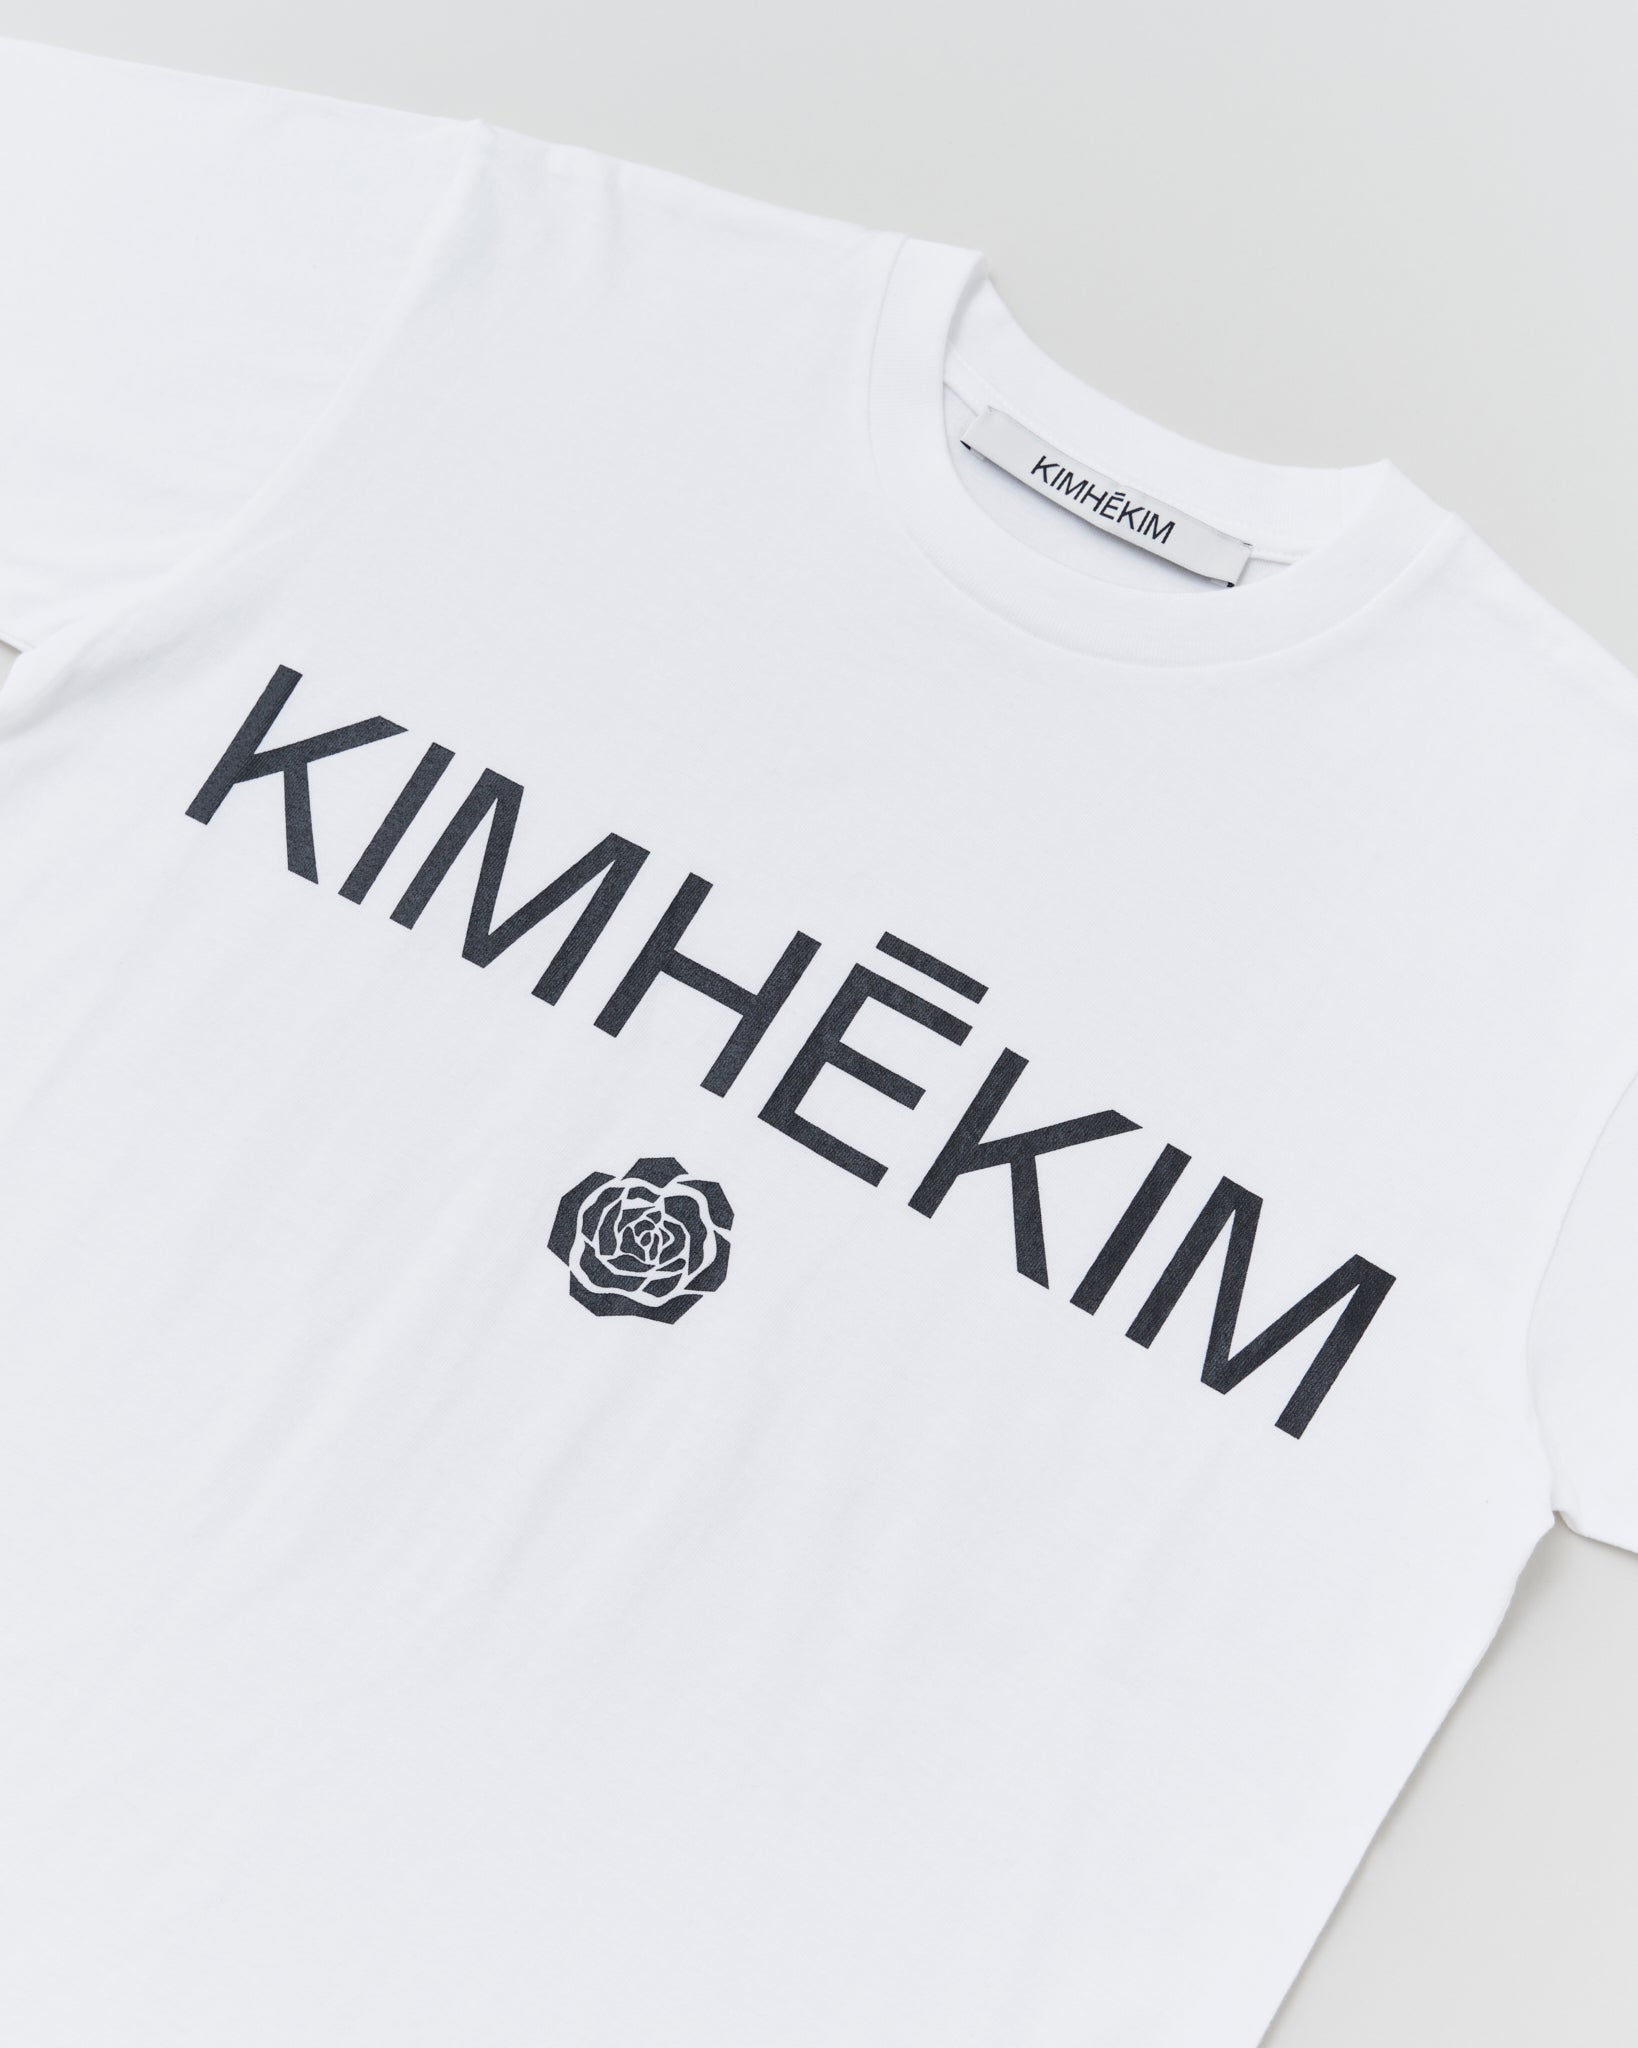 KIMHEKIM ROSE T-SHIRT (White)